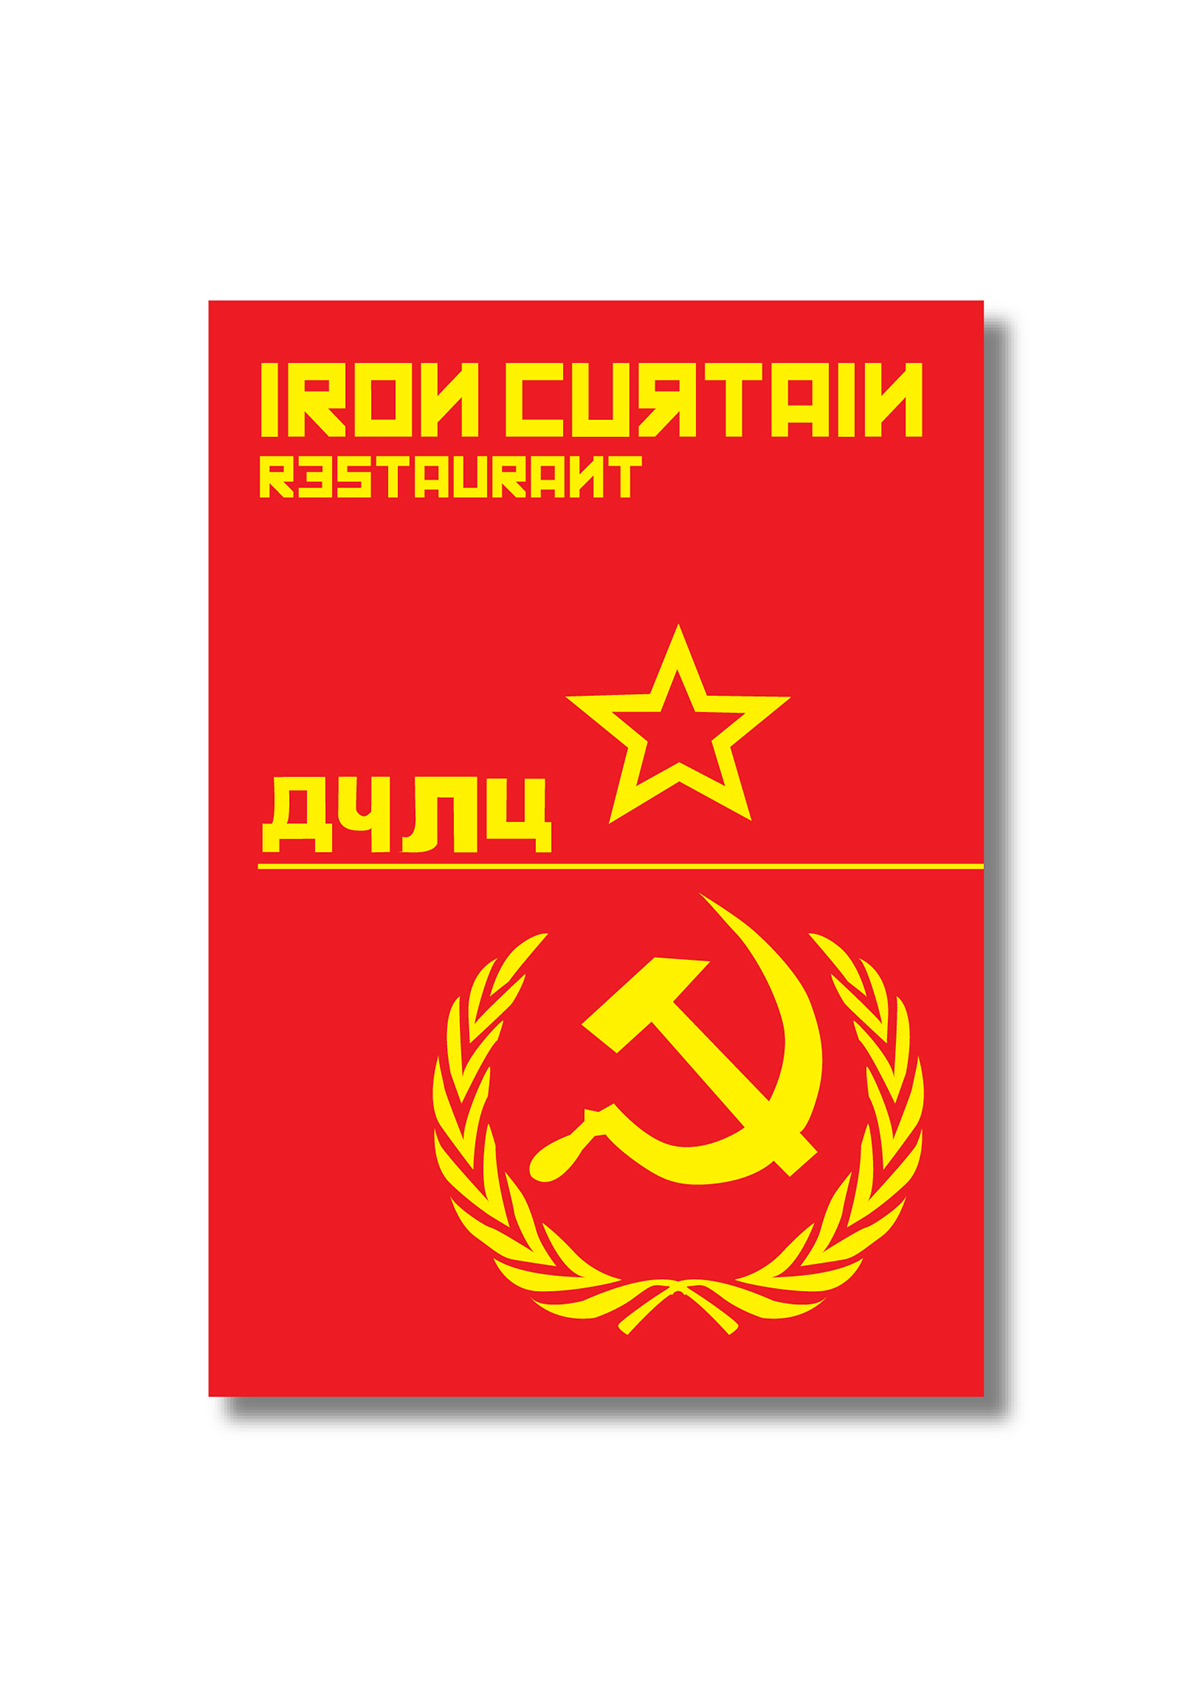 Soviet russian restaurant Propaganda cccp hammer & sickle iron curtain